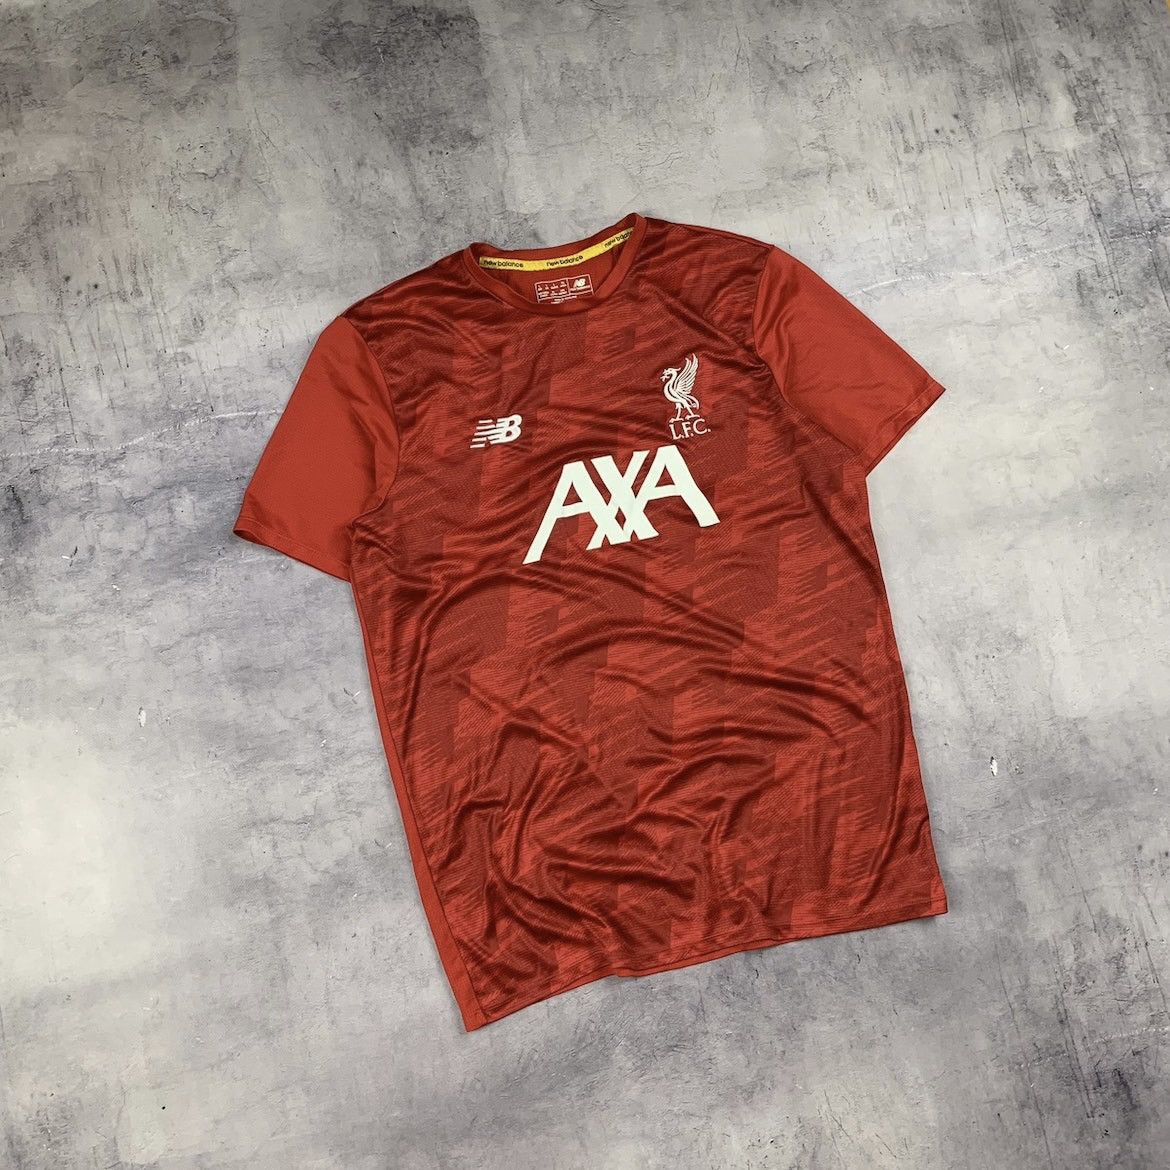 New Balance Liverpool New Balance Soccer Football Shirt Jersey | Grailed